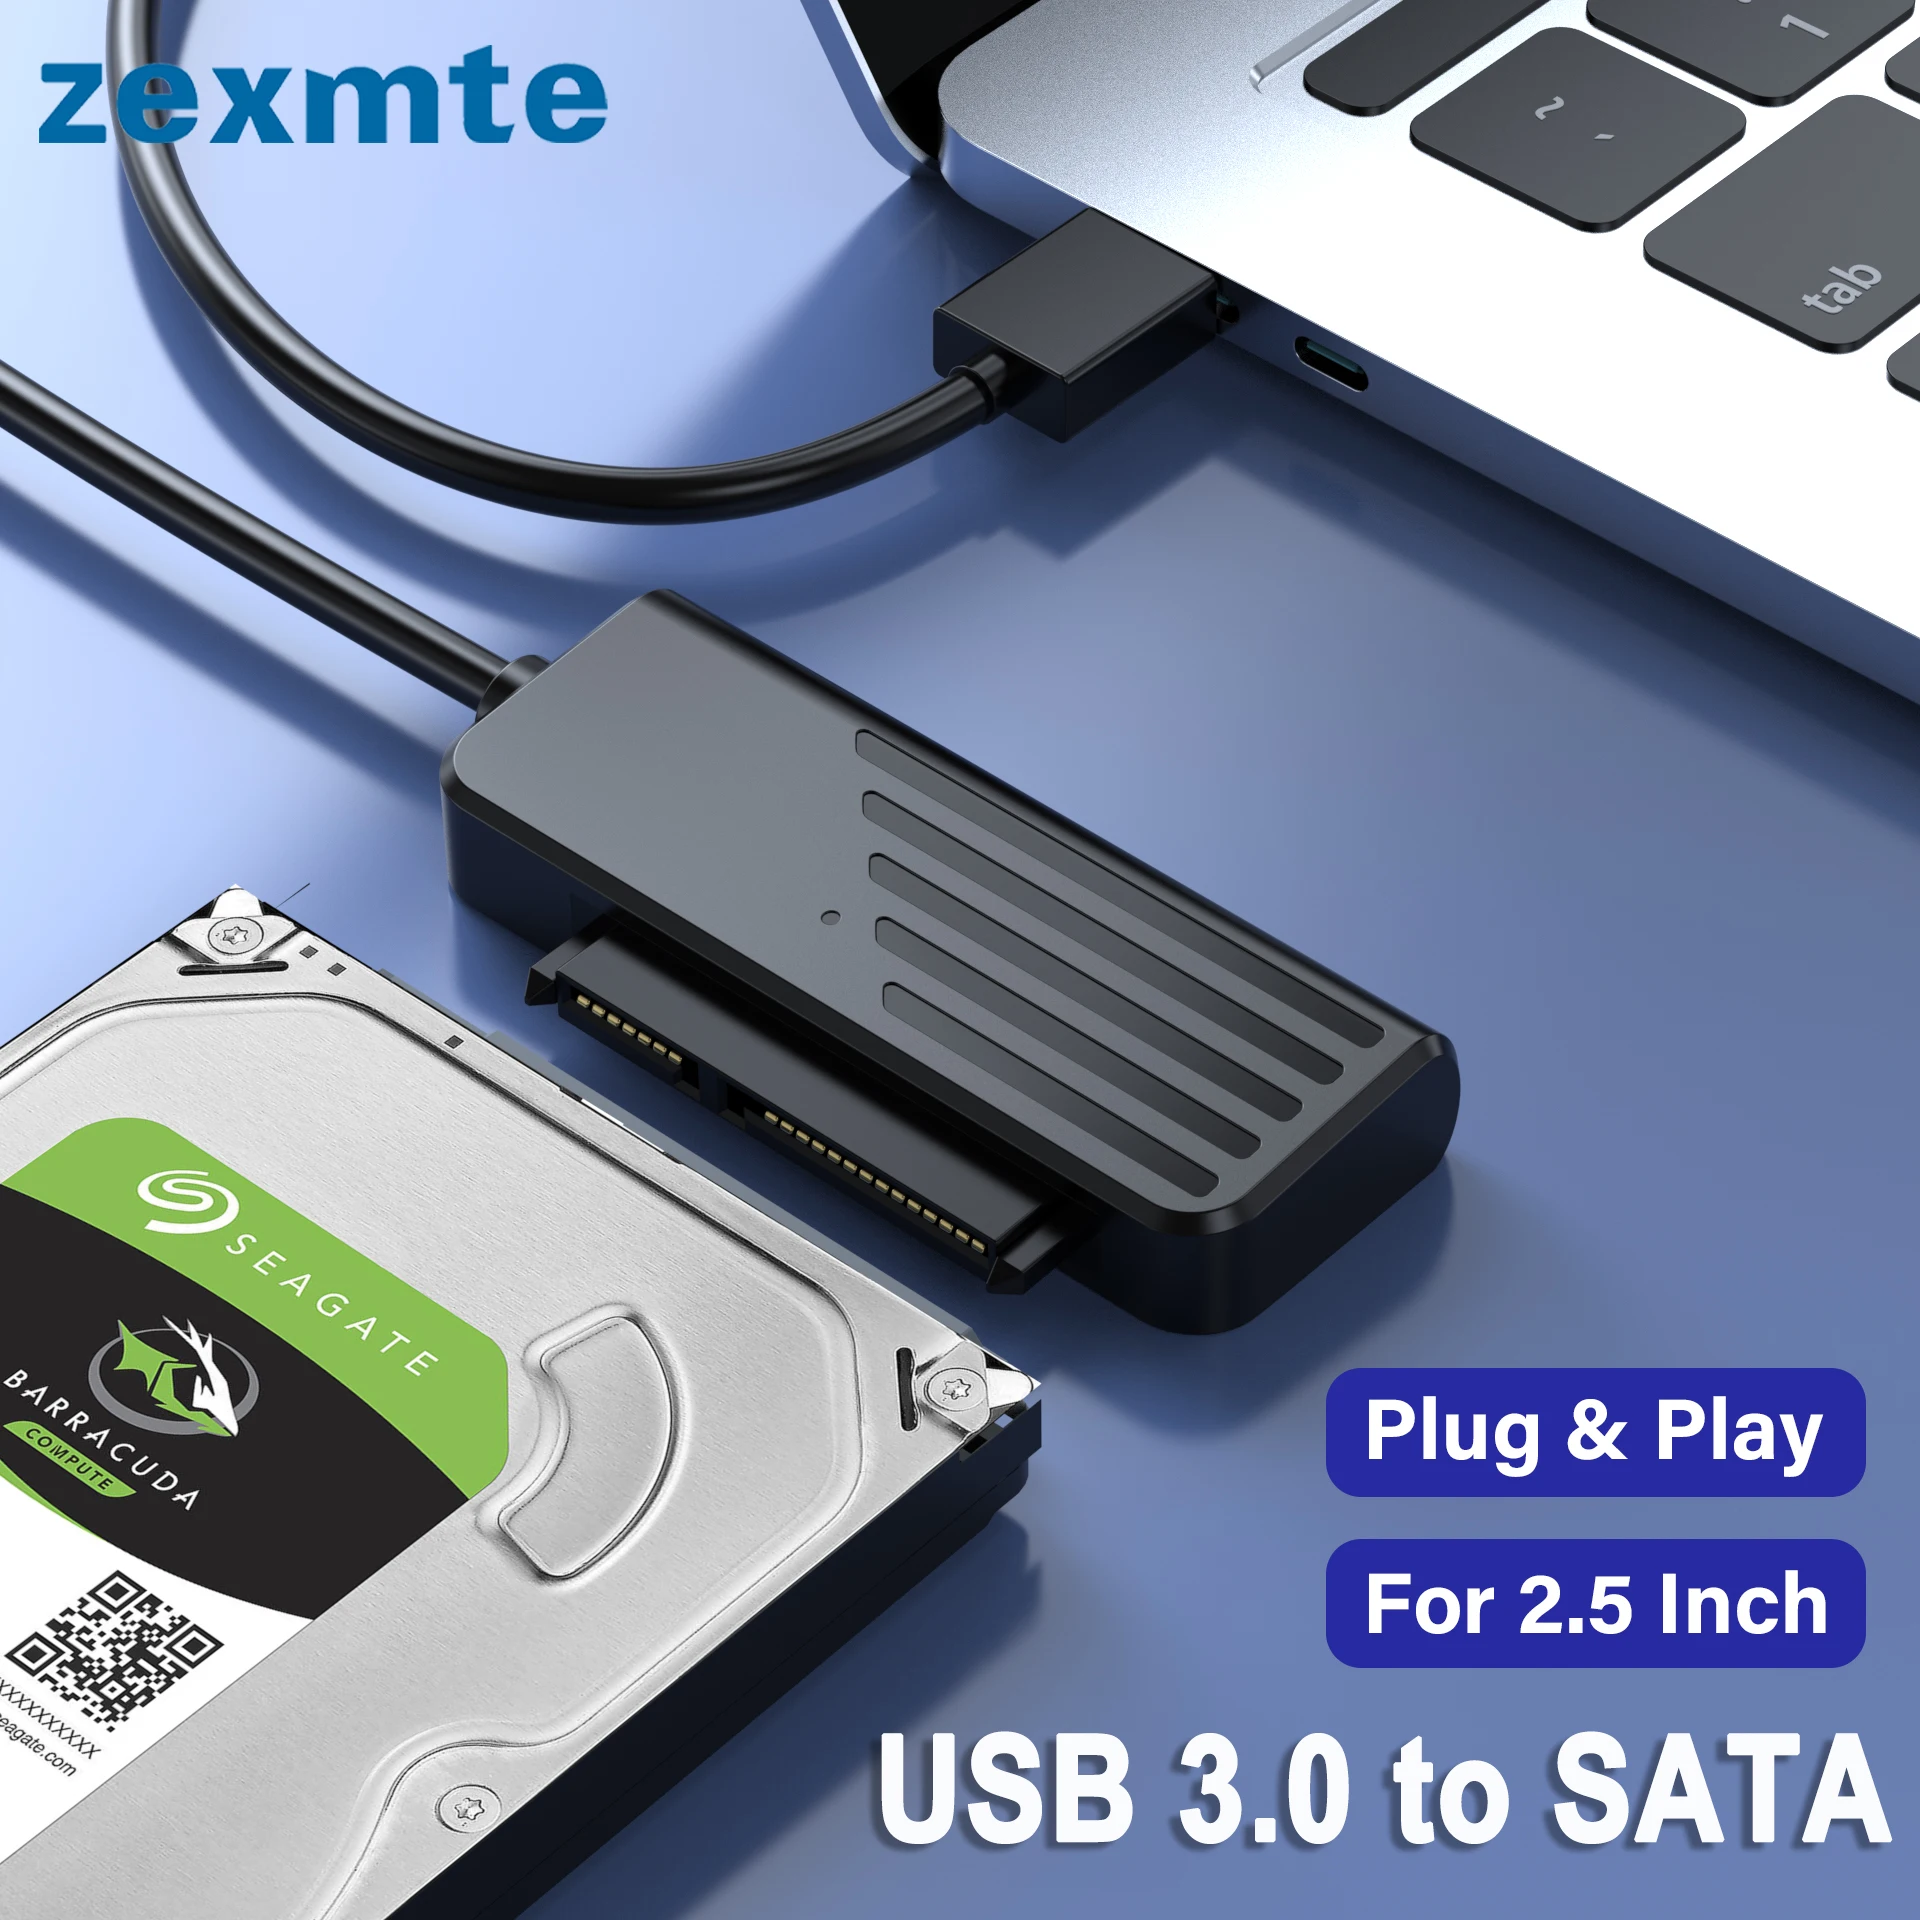 Sata Usb 3.0 Adapter Cable Hard Disk Driver Ssd - Sata Usb 3.0 Cable 2.5 - Aliexpress